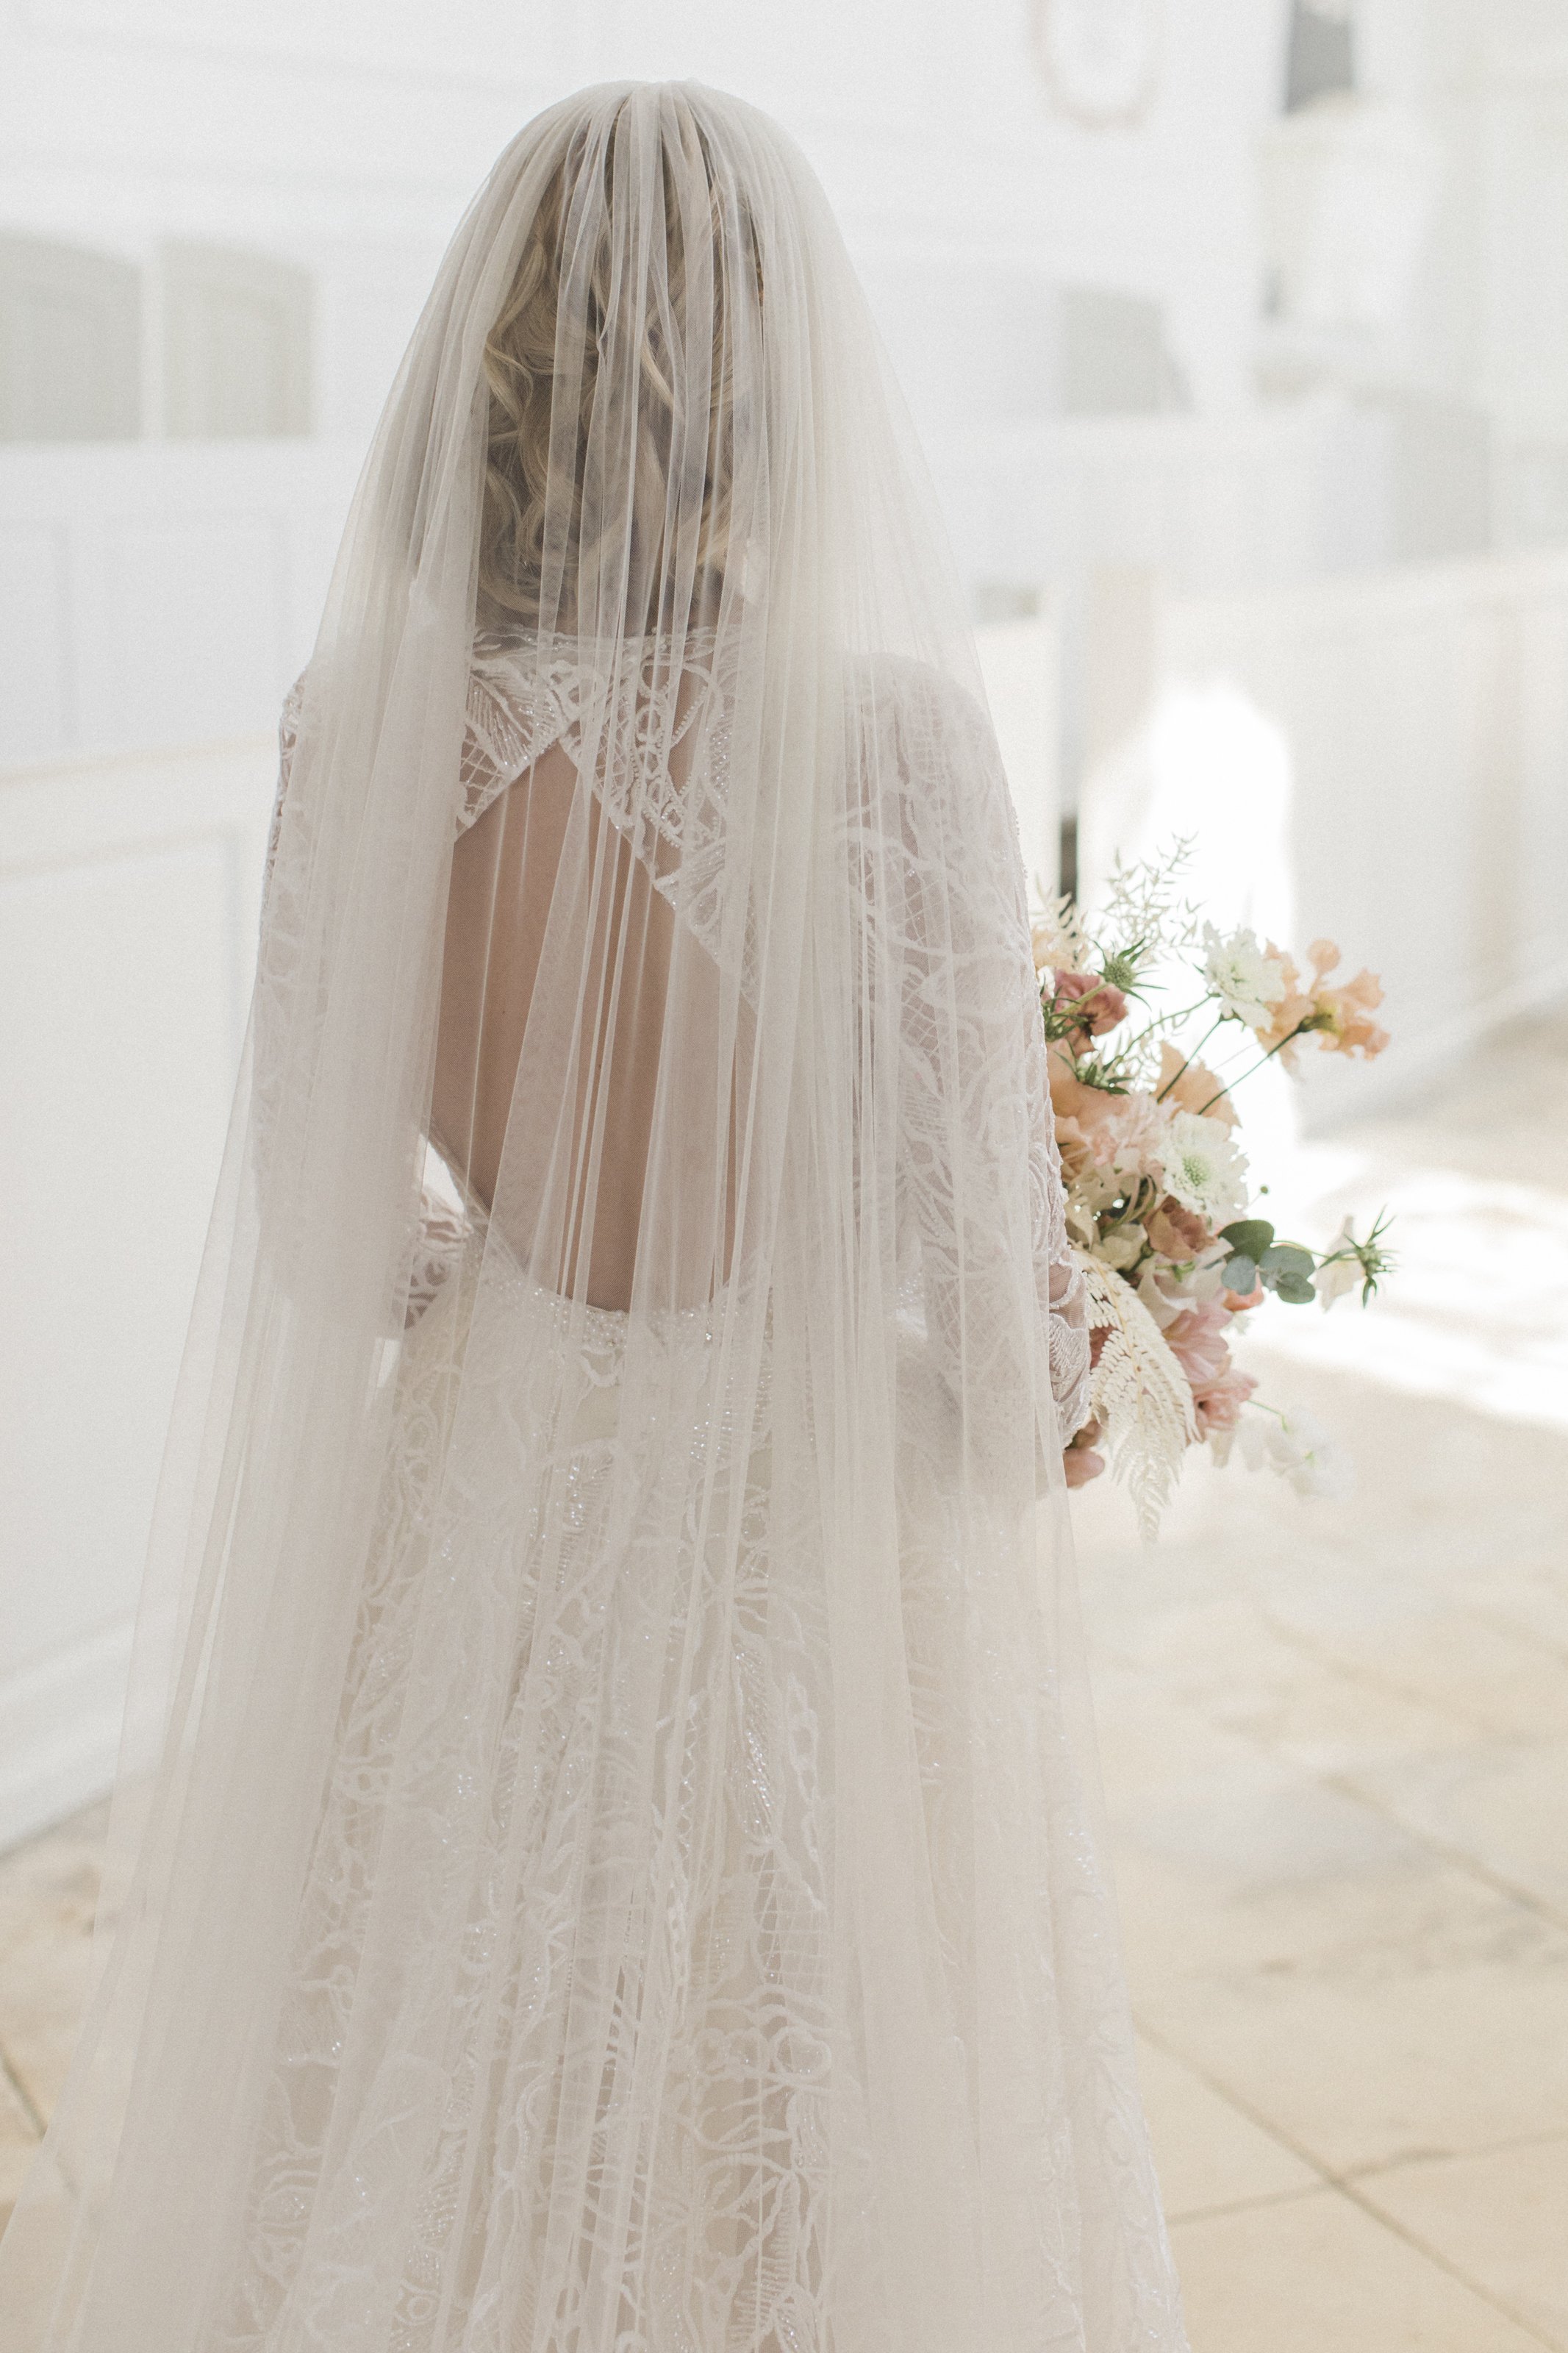  Compton Verne wedding photography bride with veil 